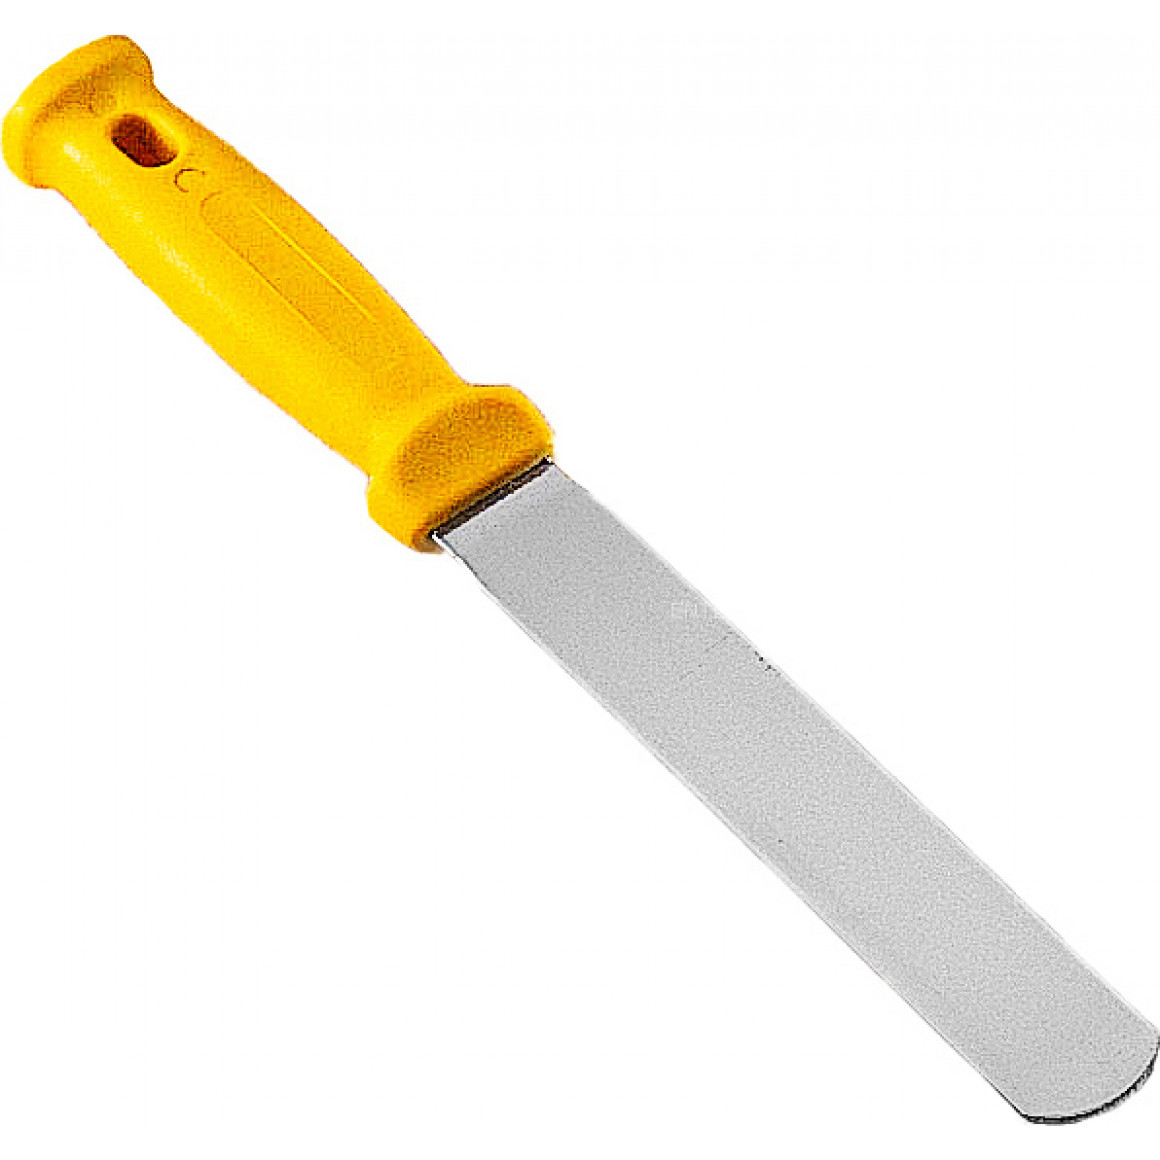 Stainless steel flexible spatula